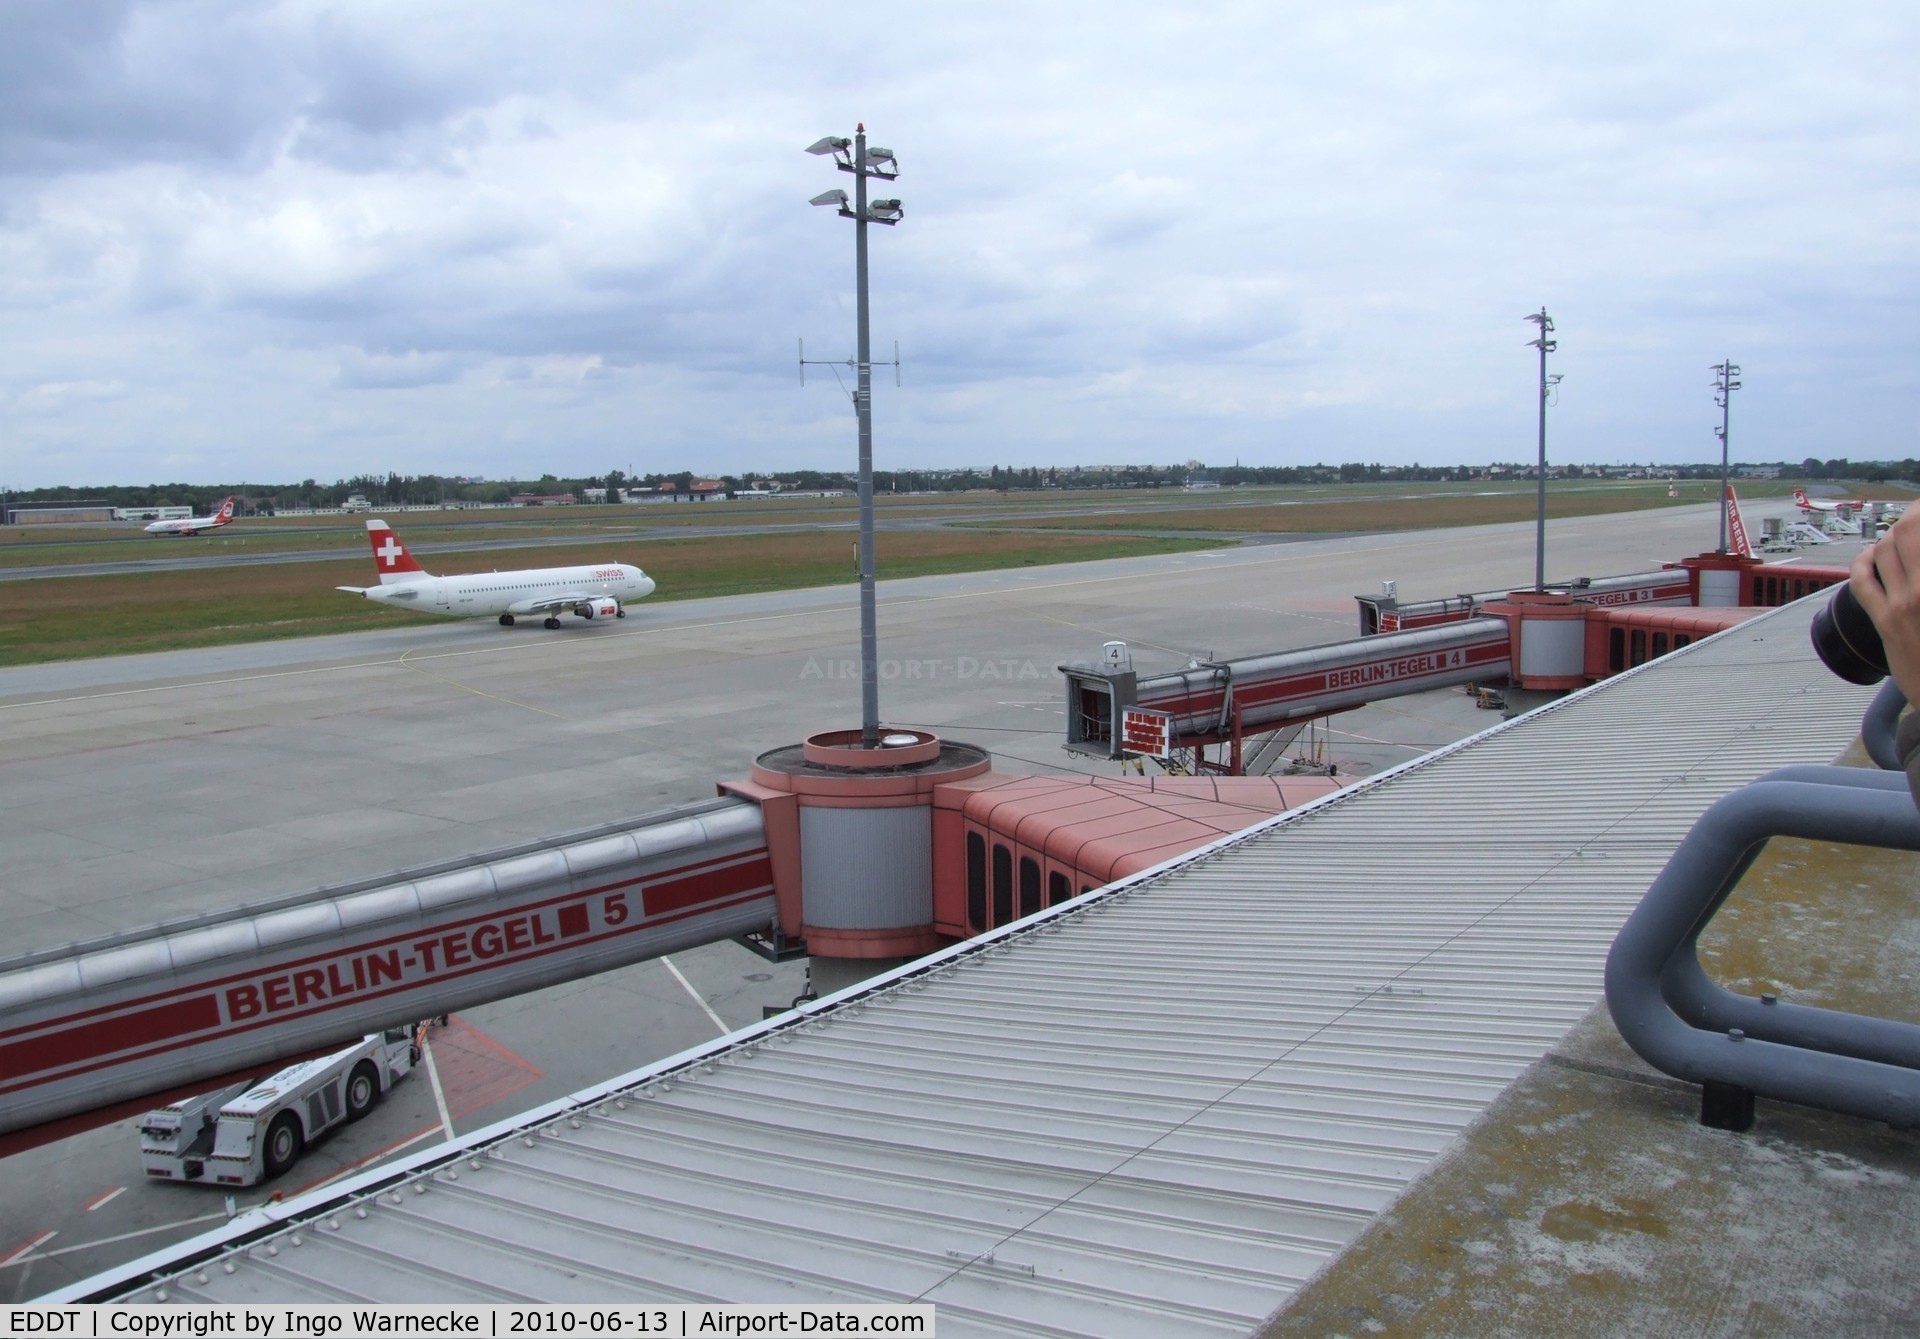 Tegel International Airport (closing in 2011), Berlin Germany (EDDT) - apron and boarding bridges at Berlin Tegel airport